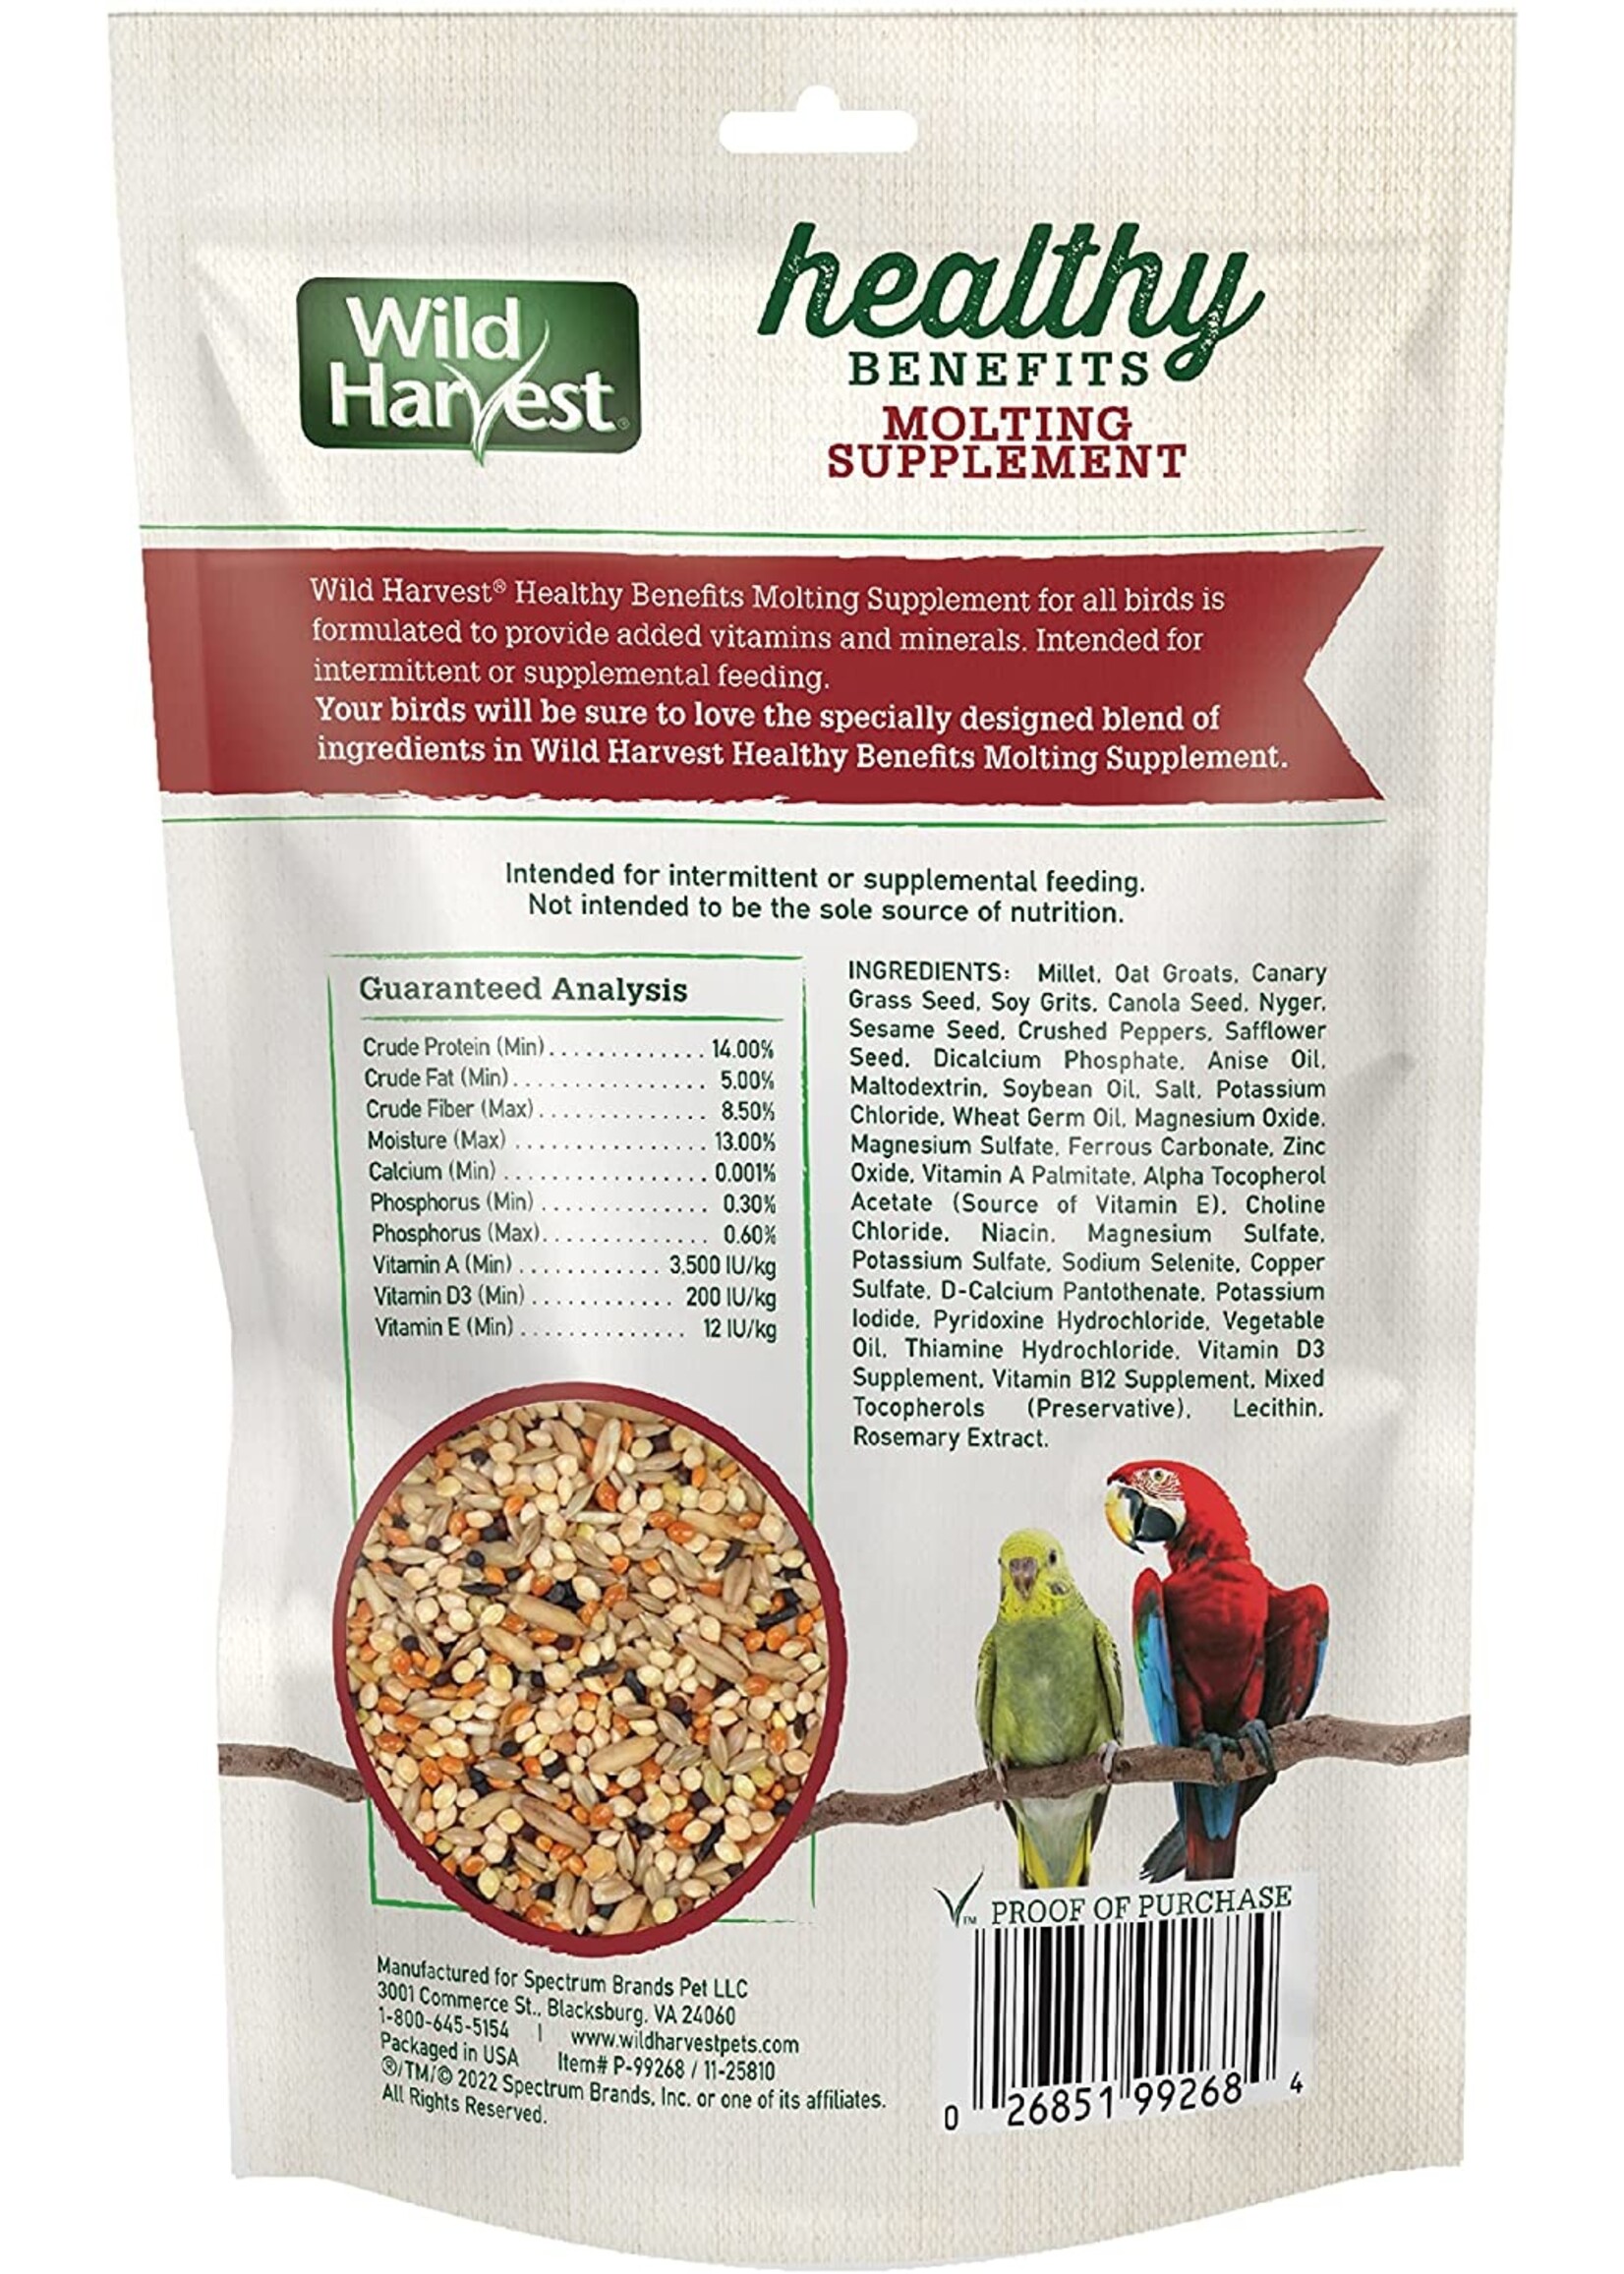 Wild Harvest Healthy Benefits Molt Supplement 7.5oz